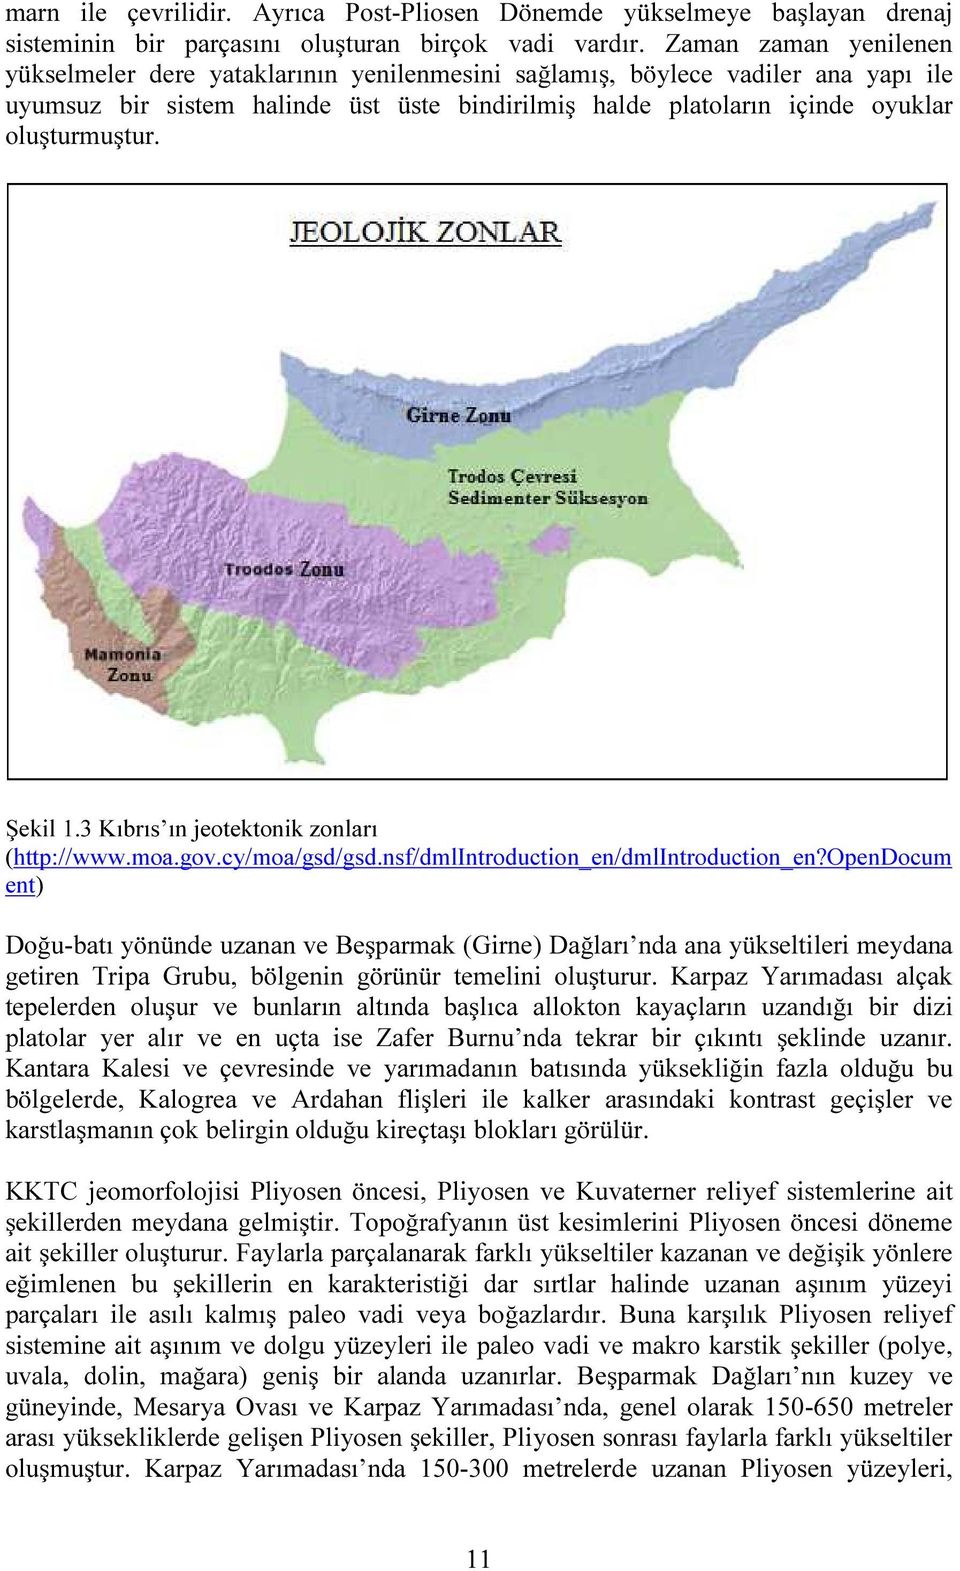 Şekil 1.3 Kıbrıs ın jeotektonik zonları (http://www.moa.gov.cy/moa/gsd/gsd.nsf/dmlintroduction_en/dmlintroduction_en?